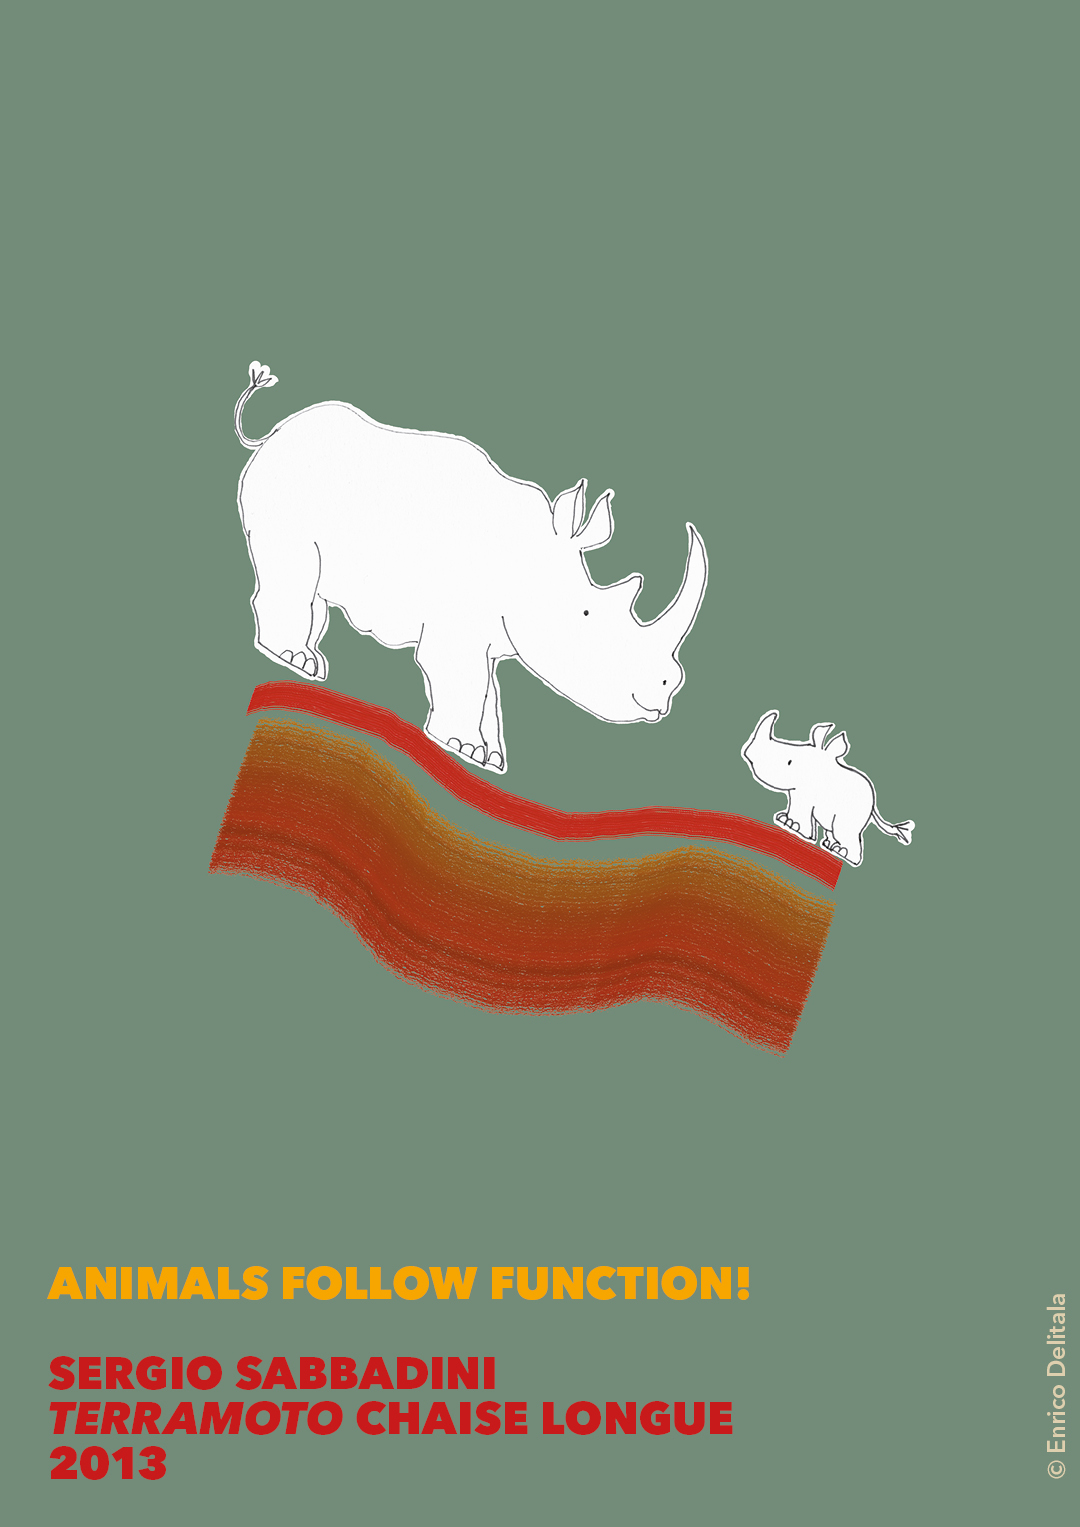 Rinoceronti: Enrico Delitala Sergio Sabbadini animals follow function form follows function